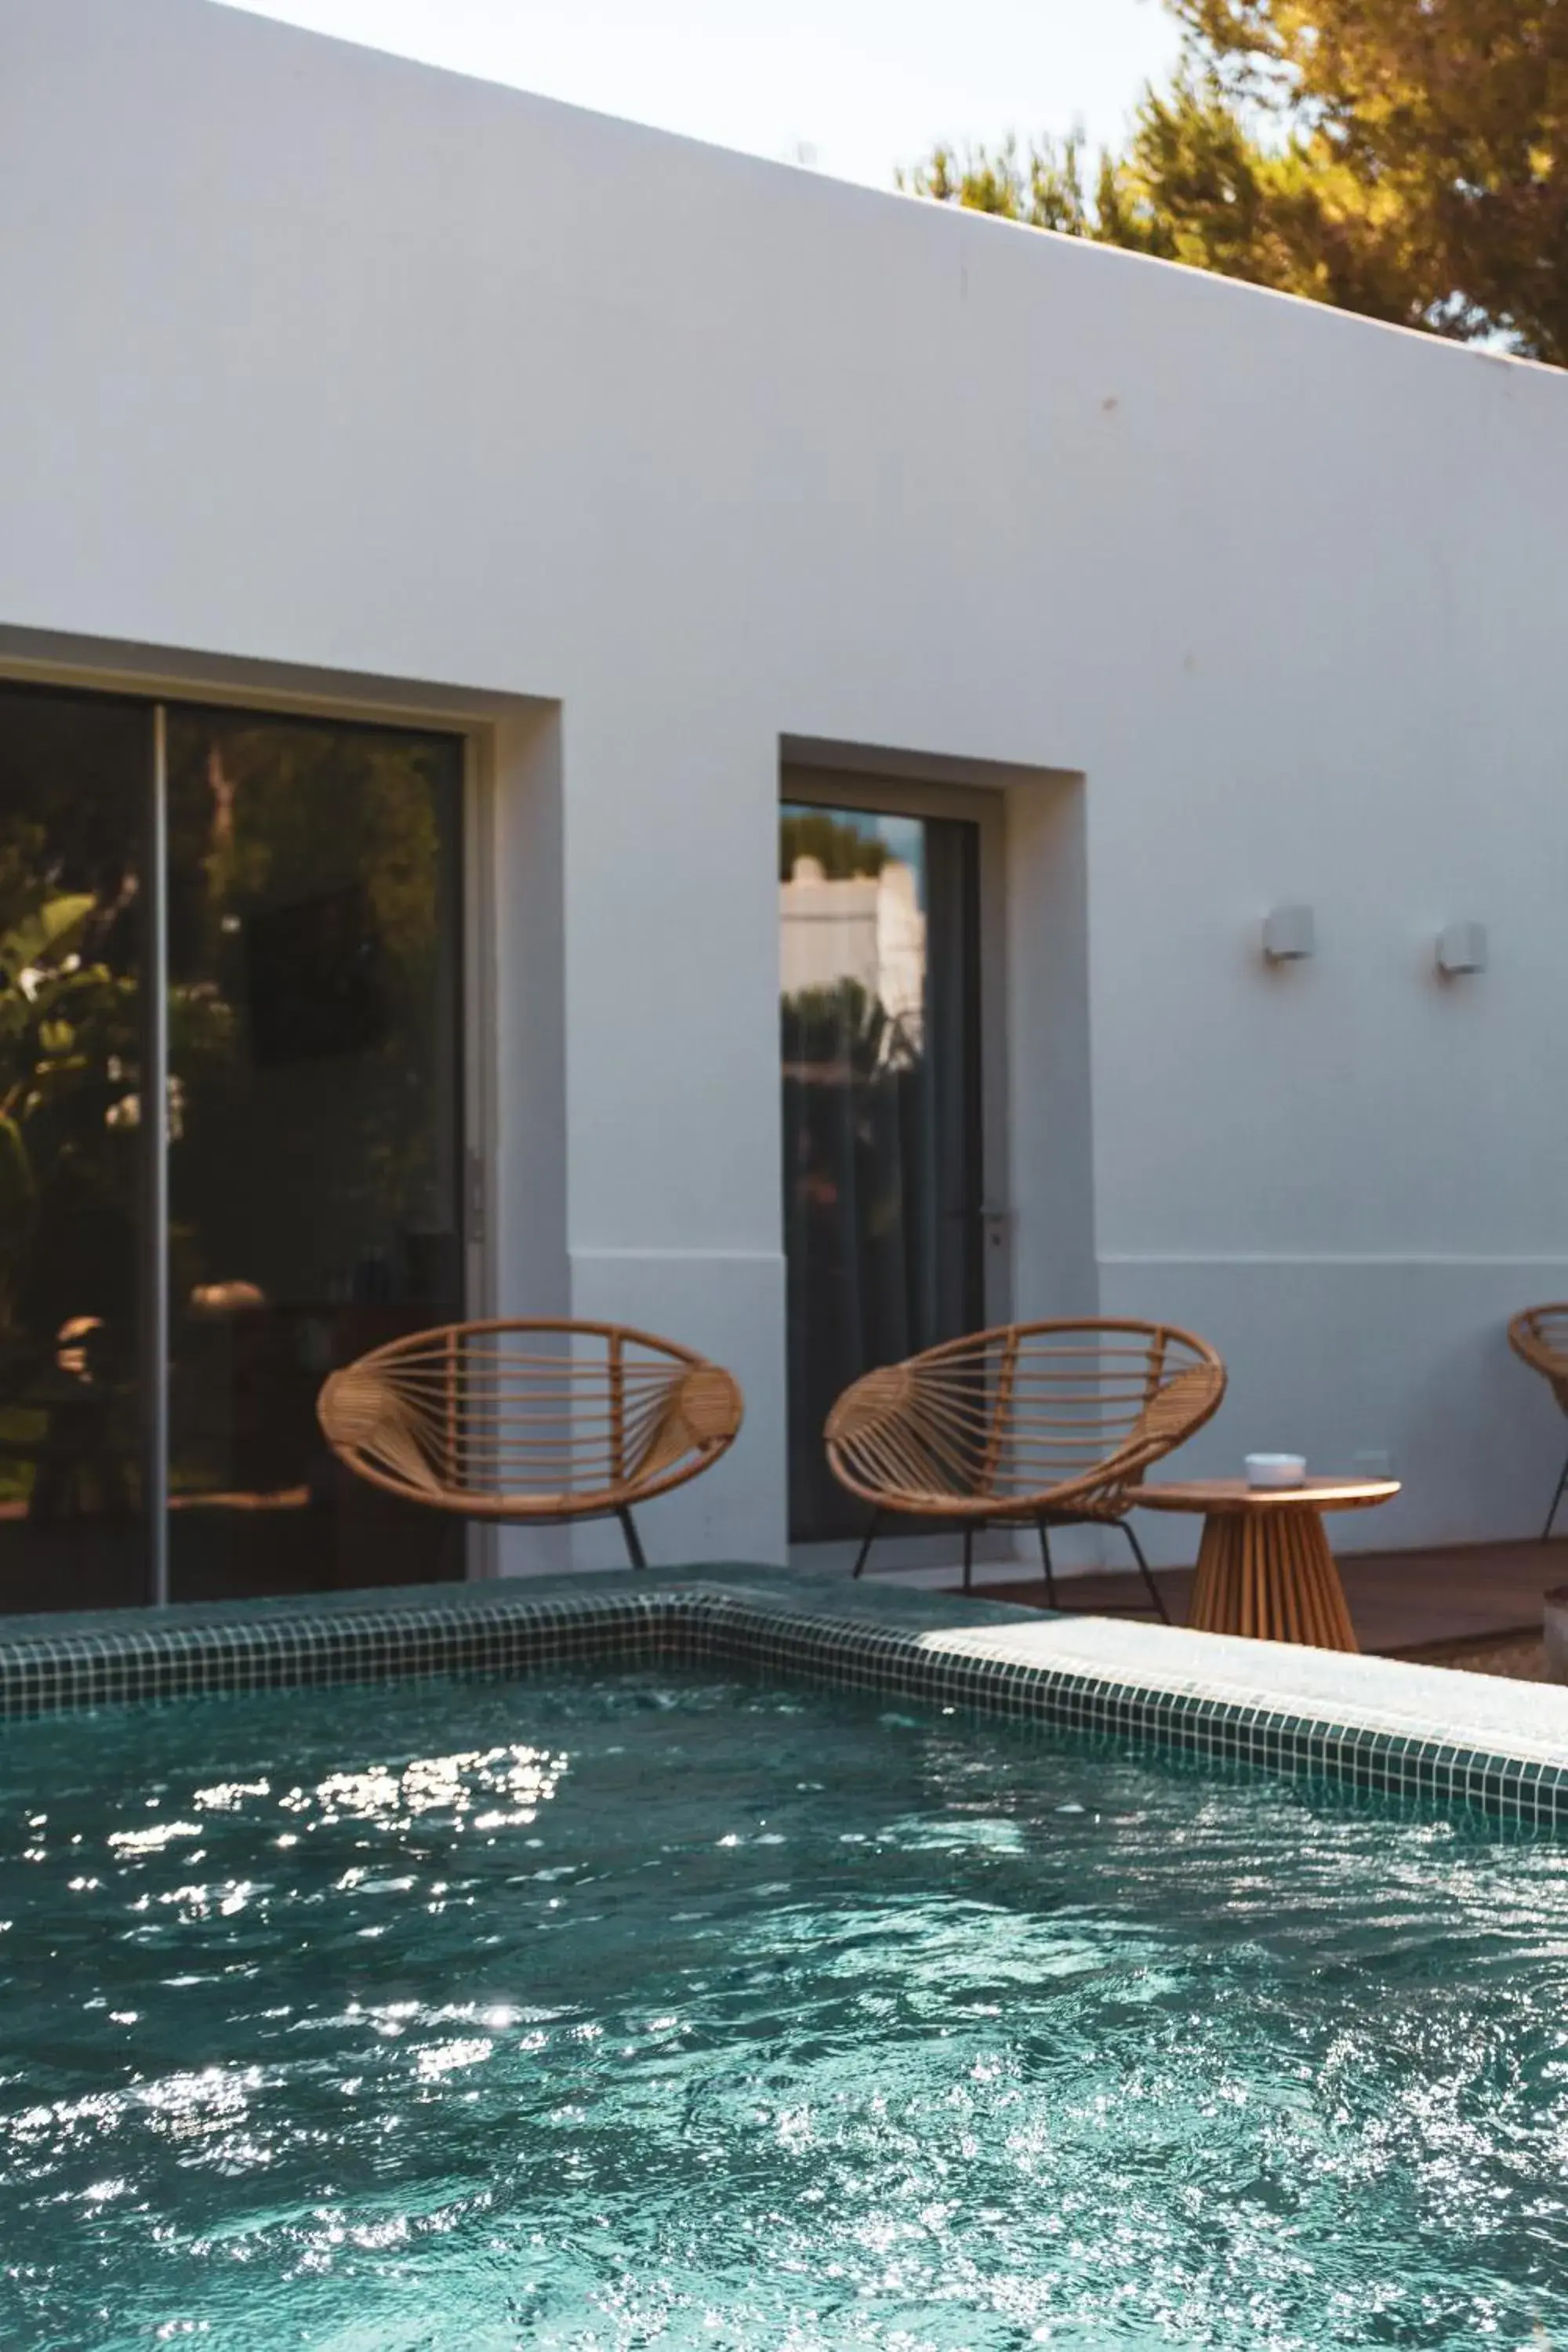 Patio, Swimming Pool in Destino Pacha Ibiza - Entrance to Pacha Club Included